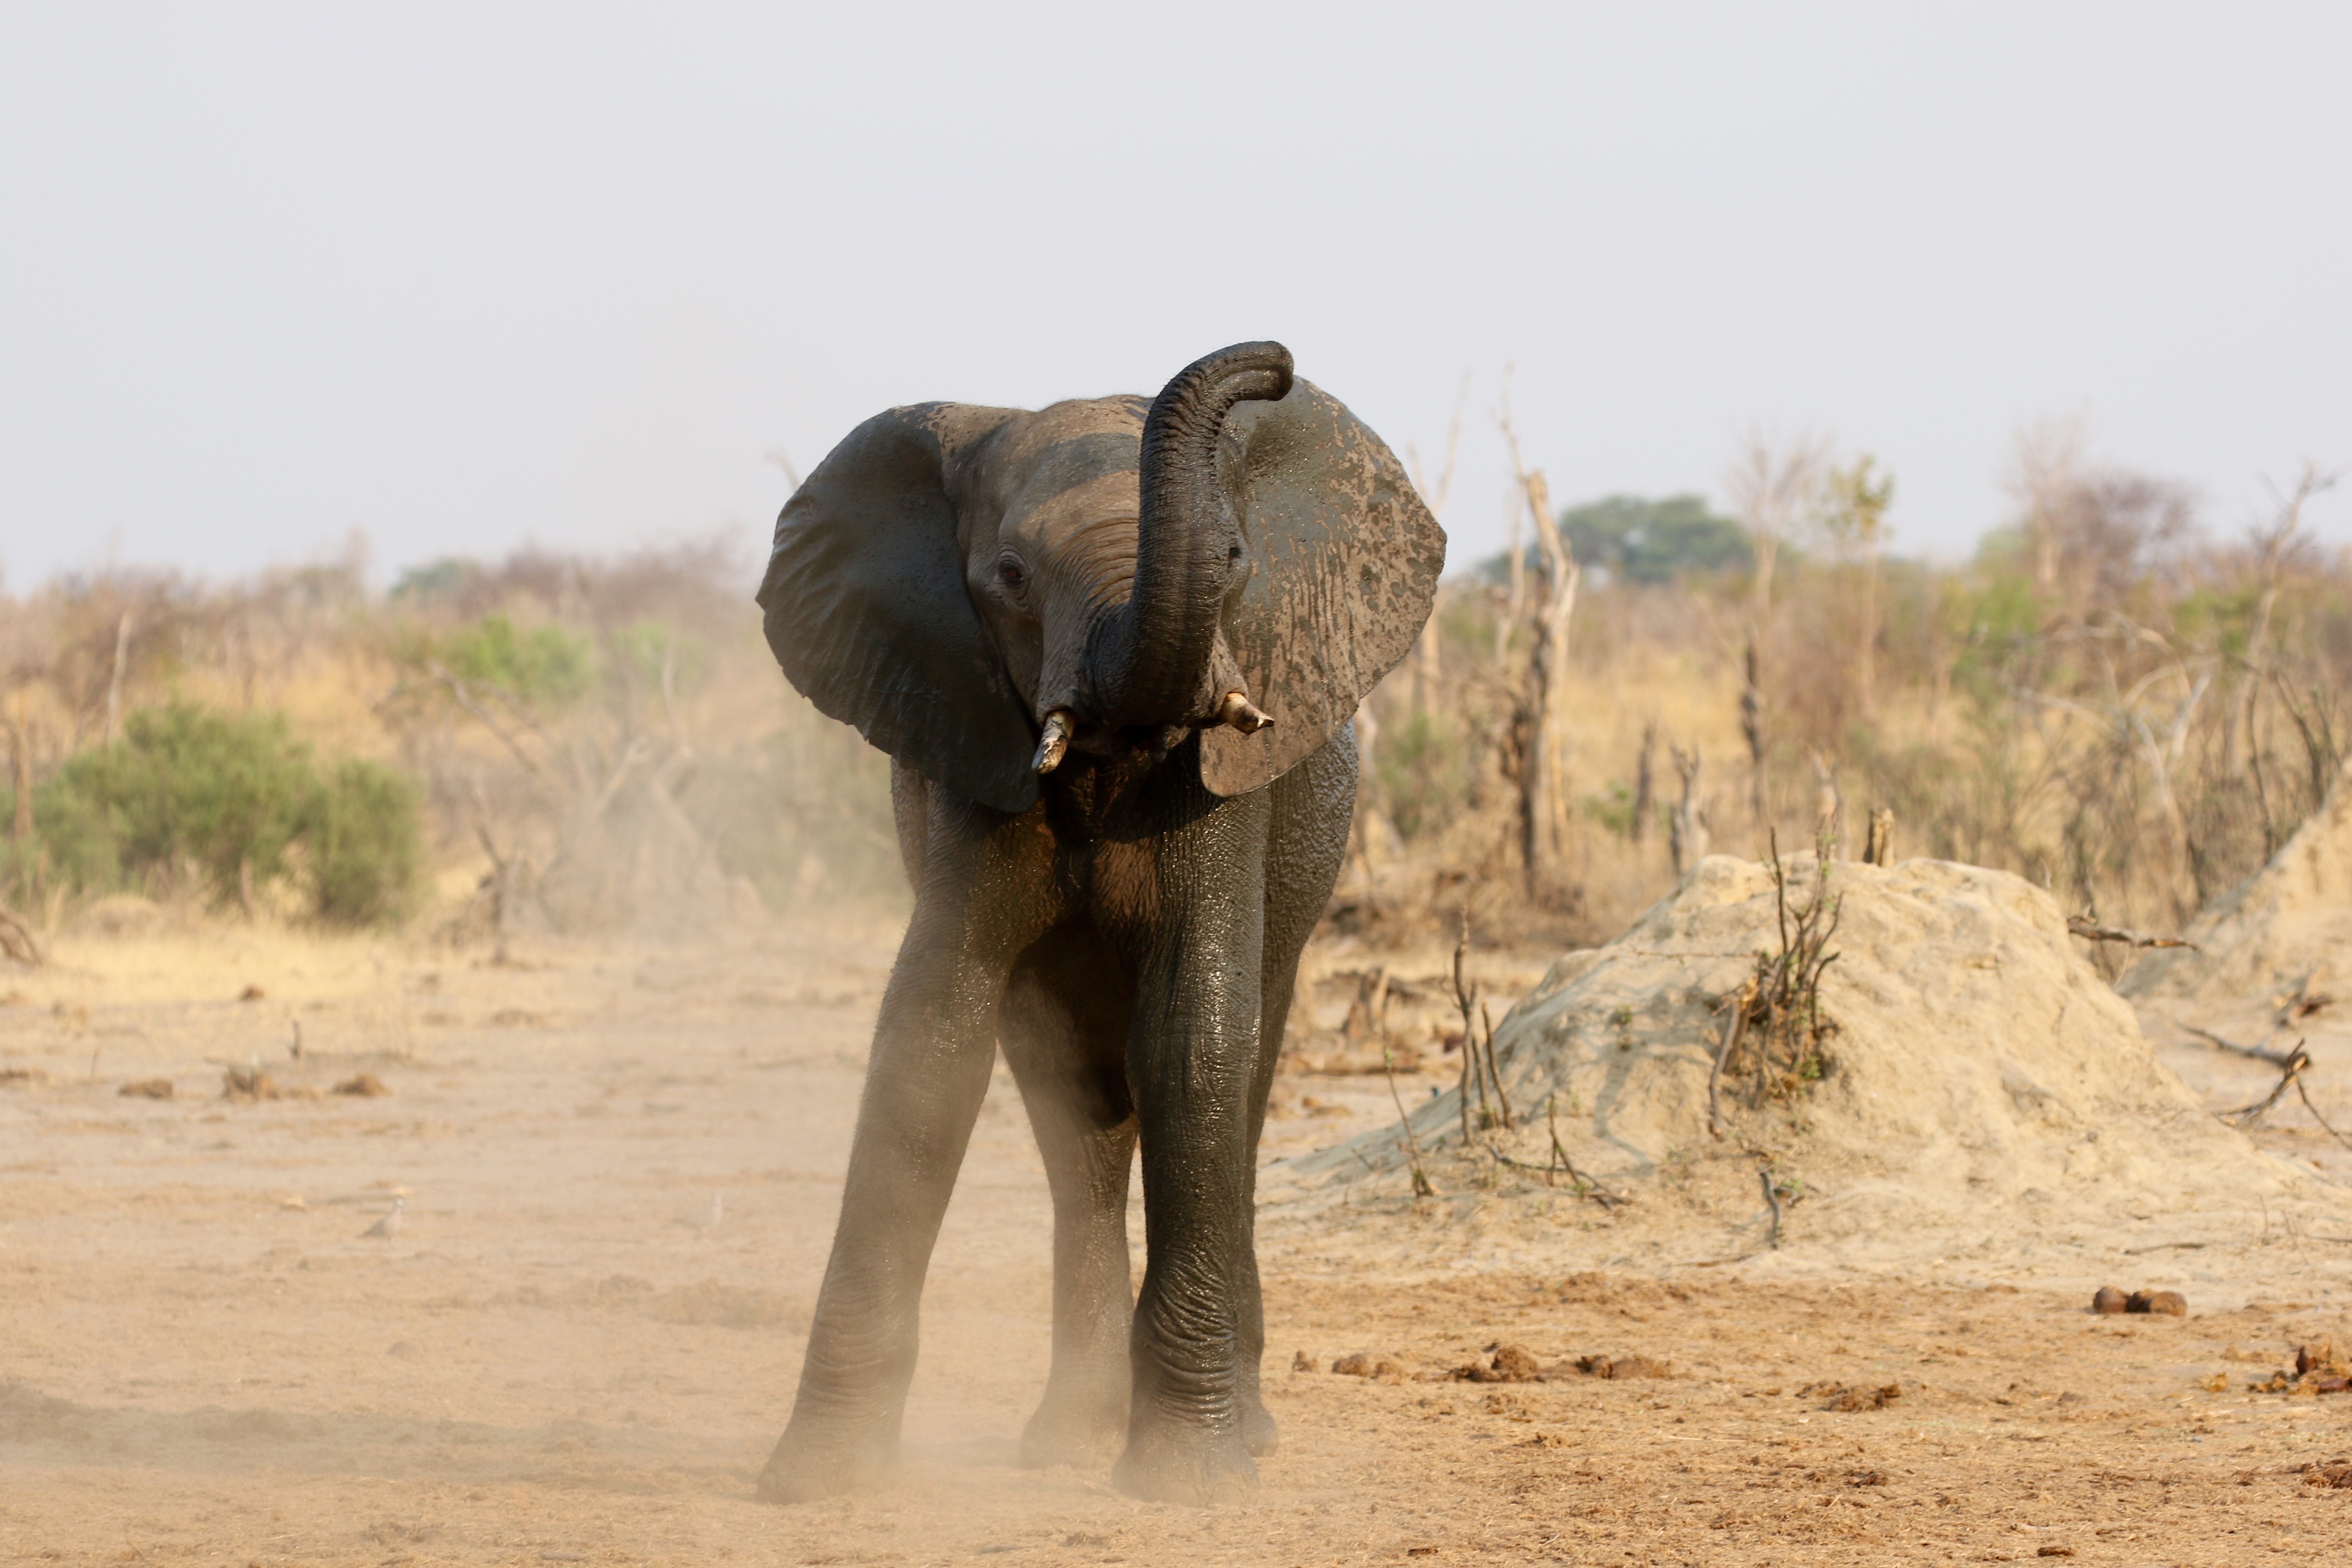 Hwange's elephants feel the dry season pressure